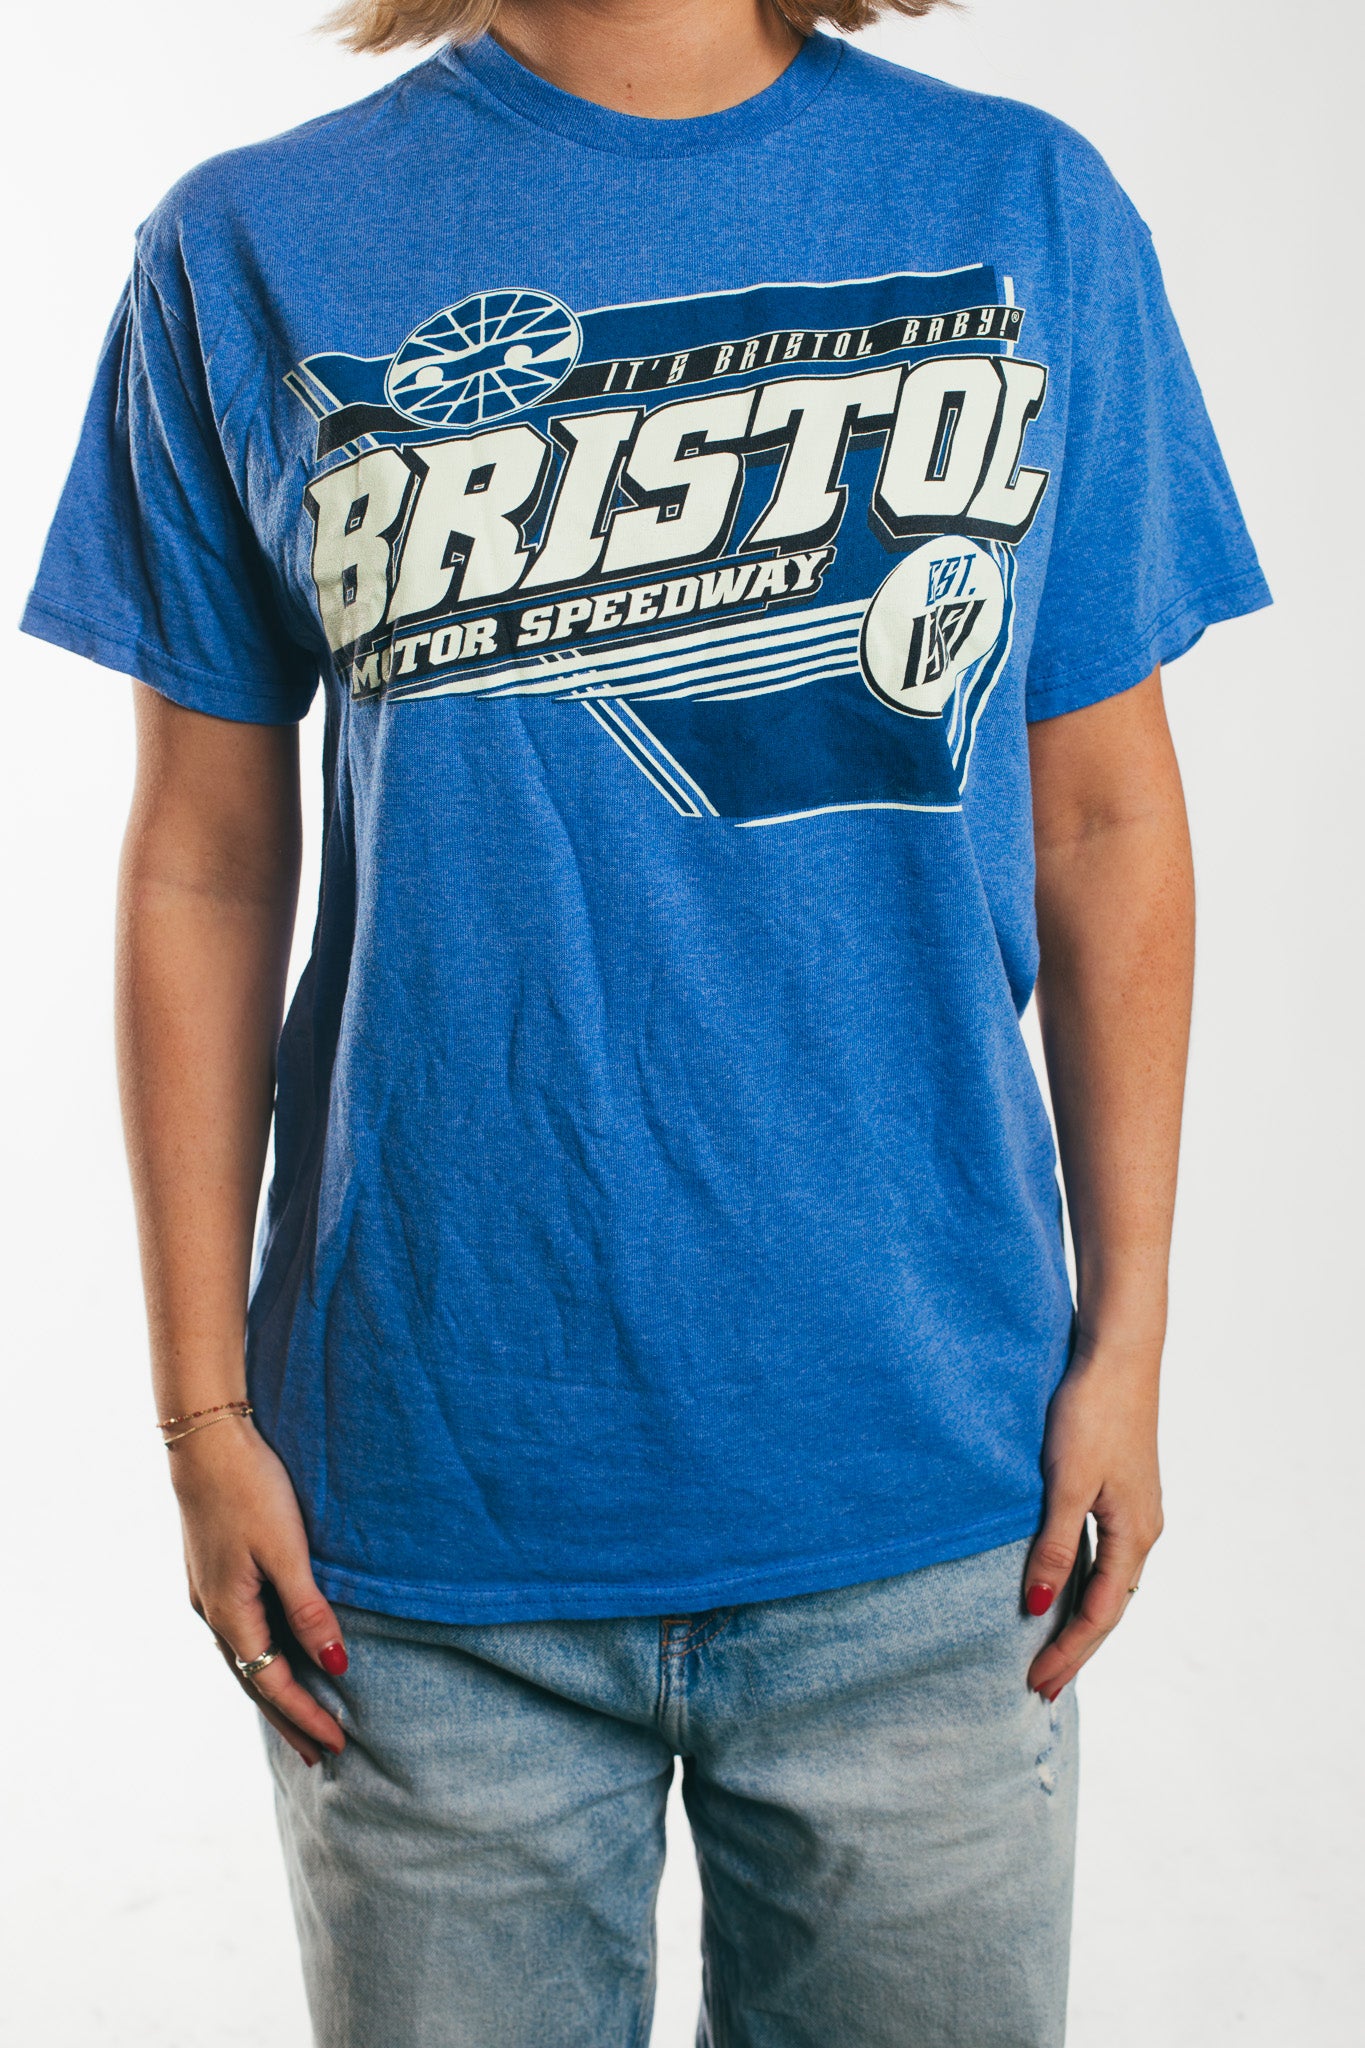 Bristol Motor Speedway - T-shirt (M)